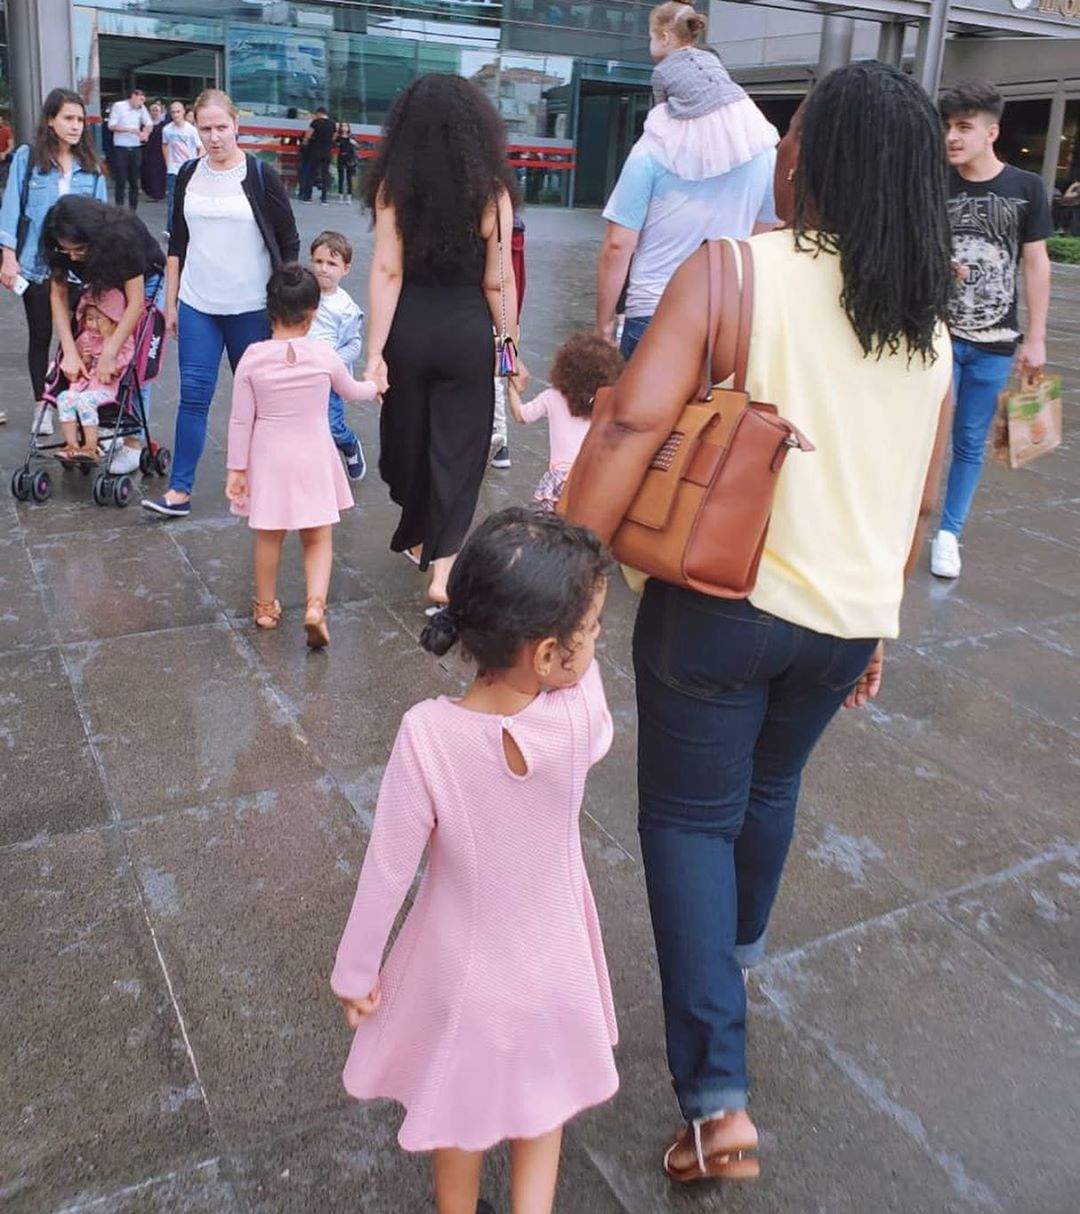 Nadia Buari shares rare photos of herself and family enjoying a stroll